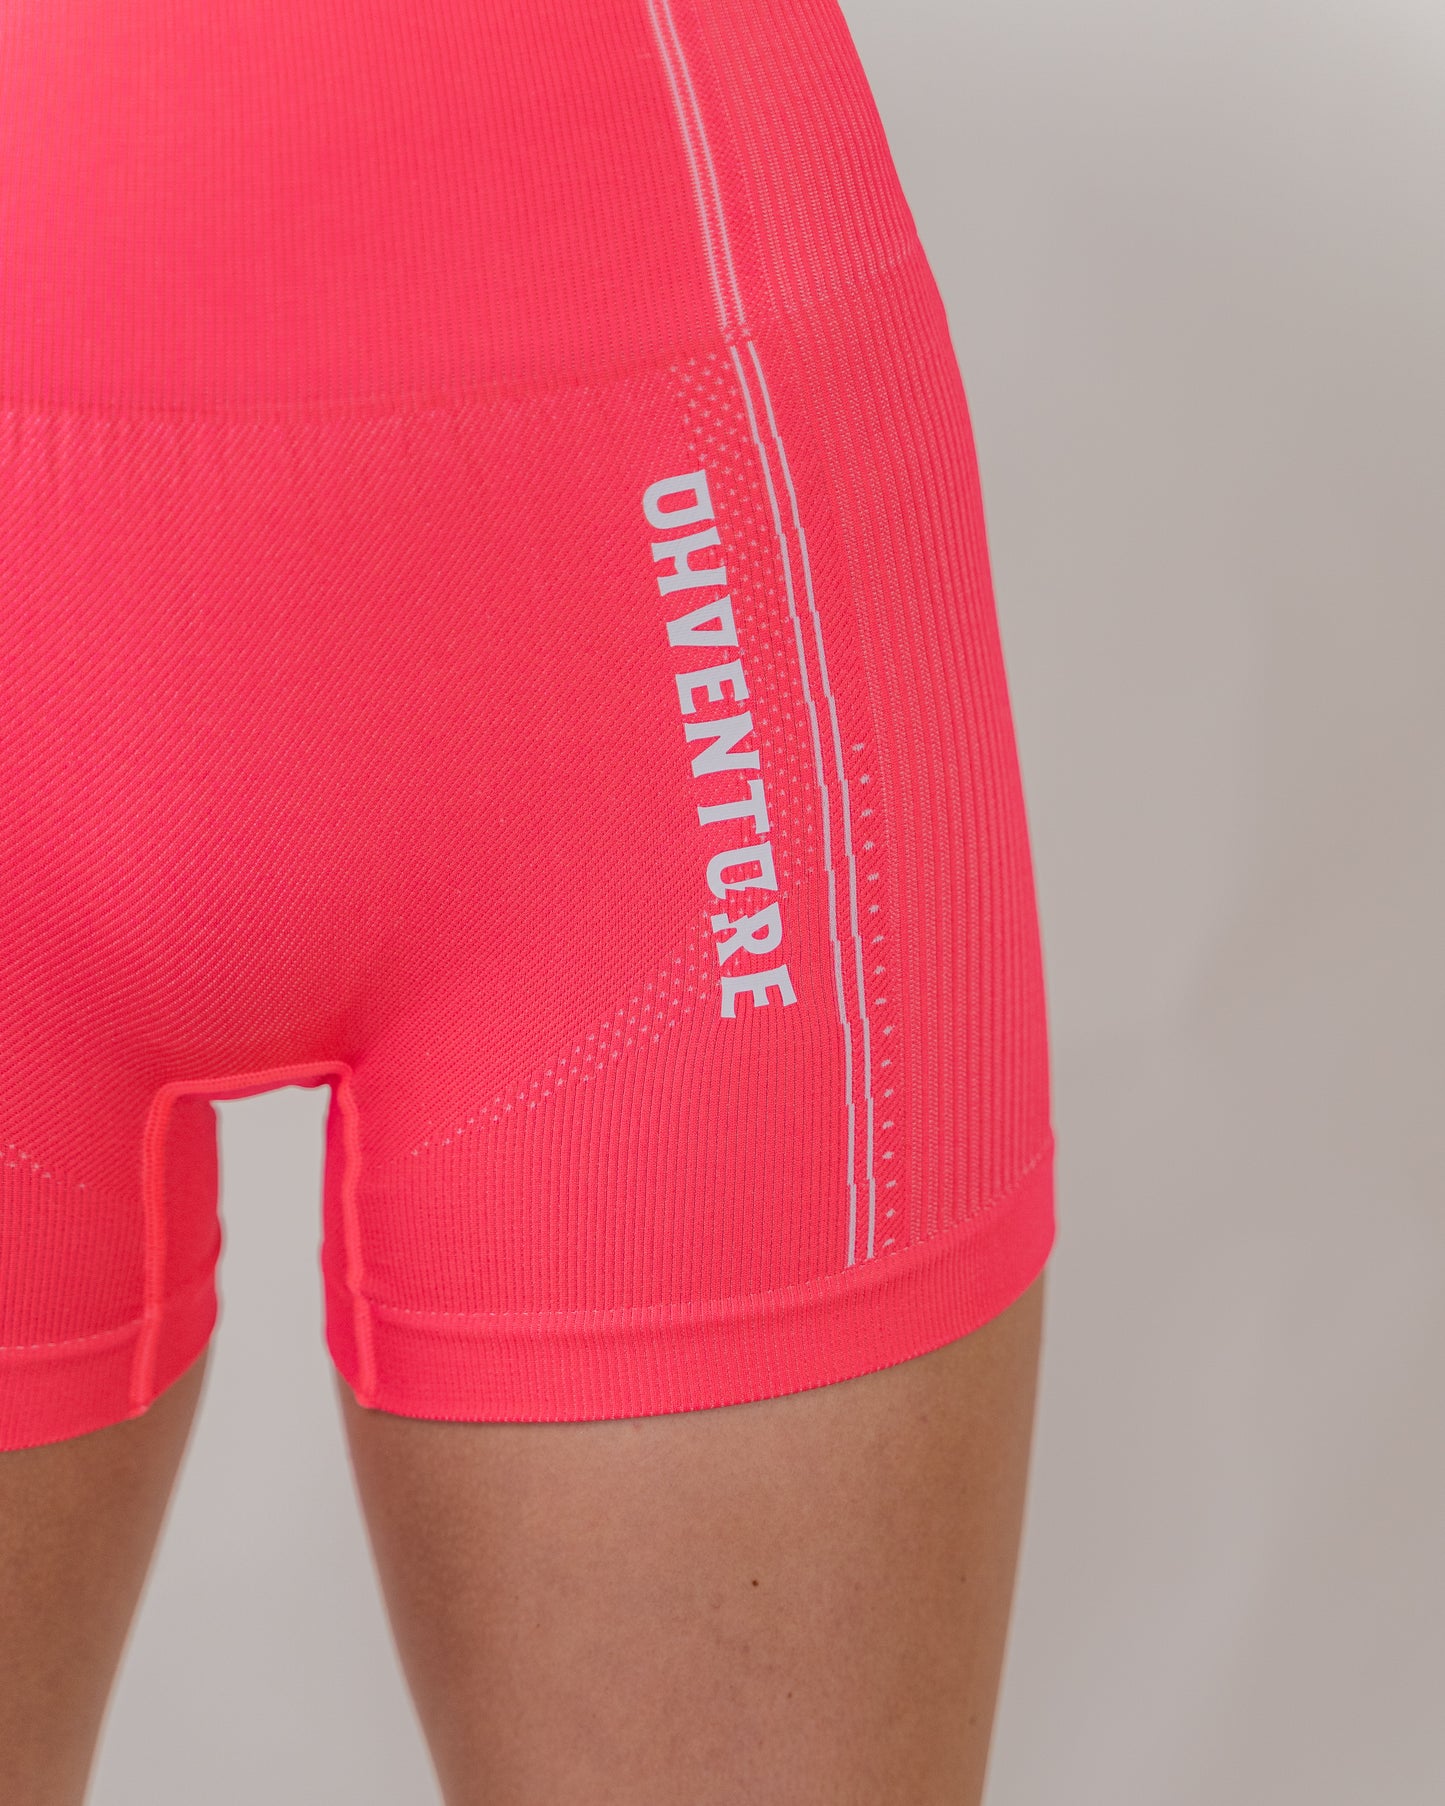 UpSurge Seamless Shorts - Uhventure